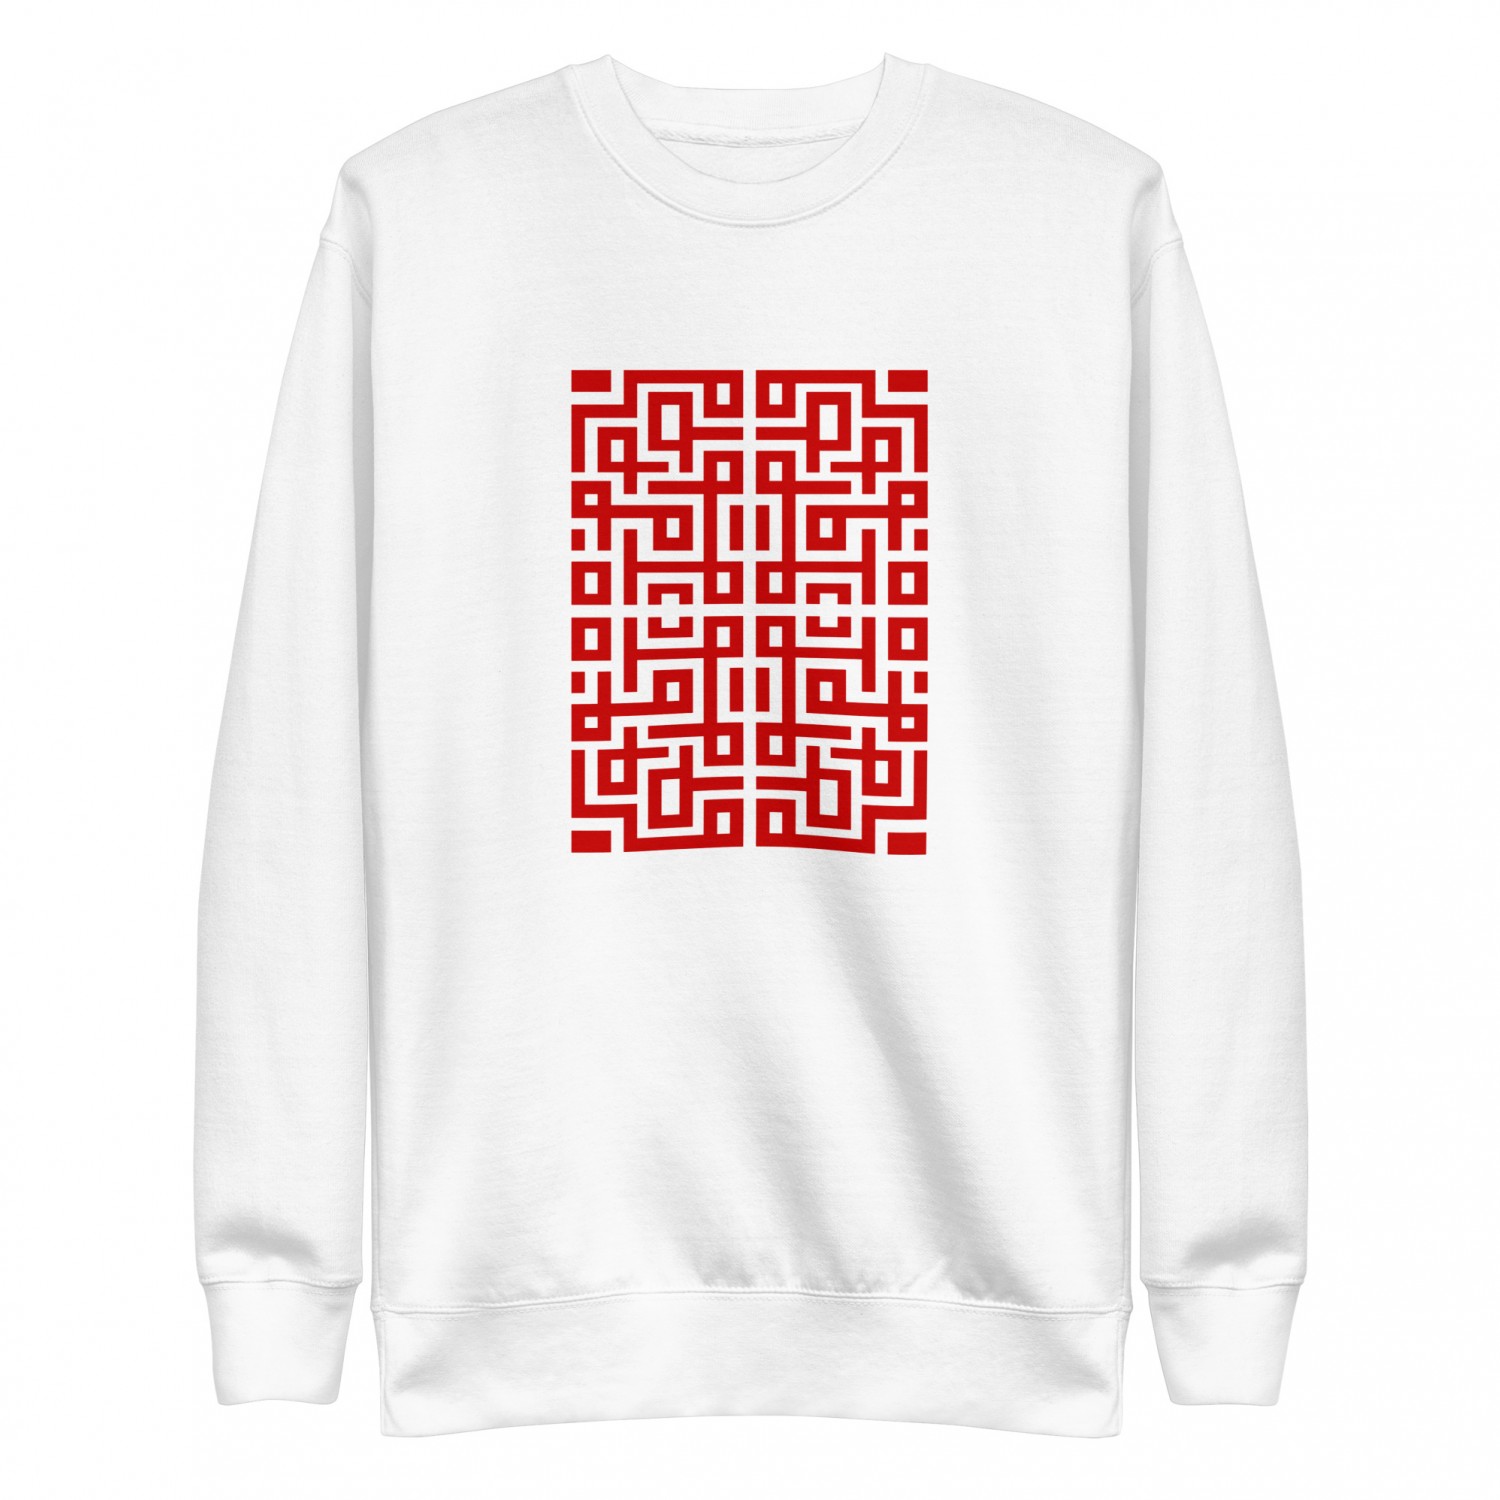 Buy a warm sweatshirt with a Slavic pattern